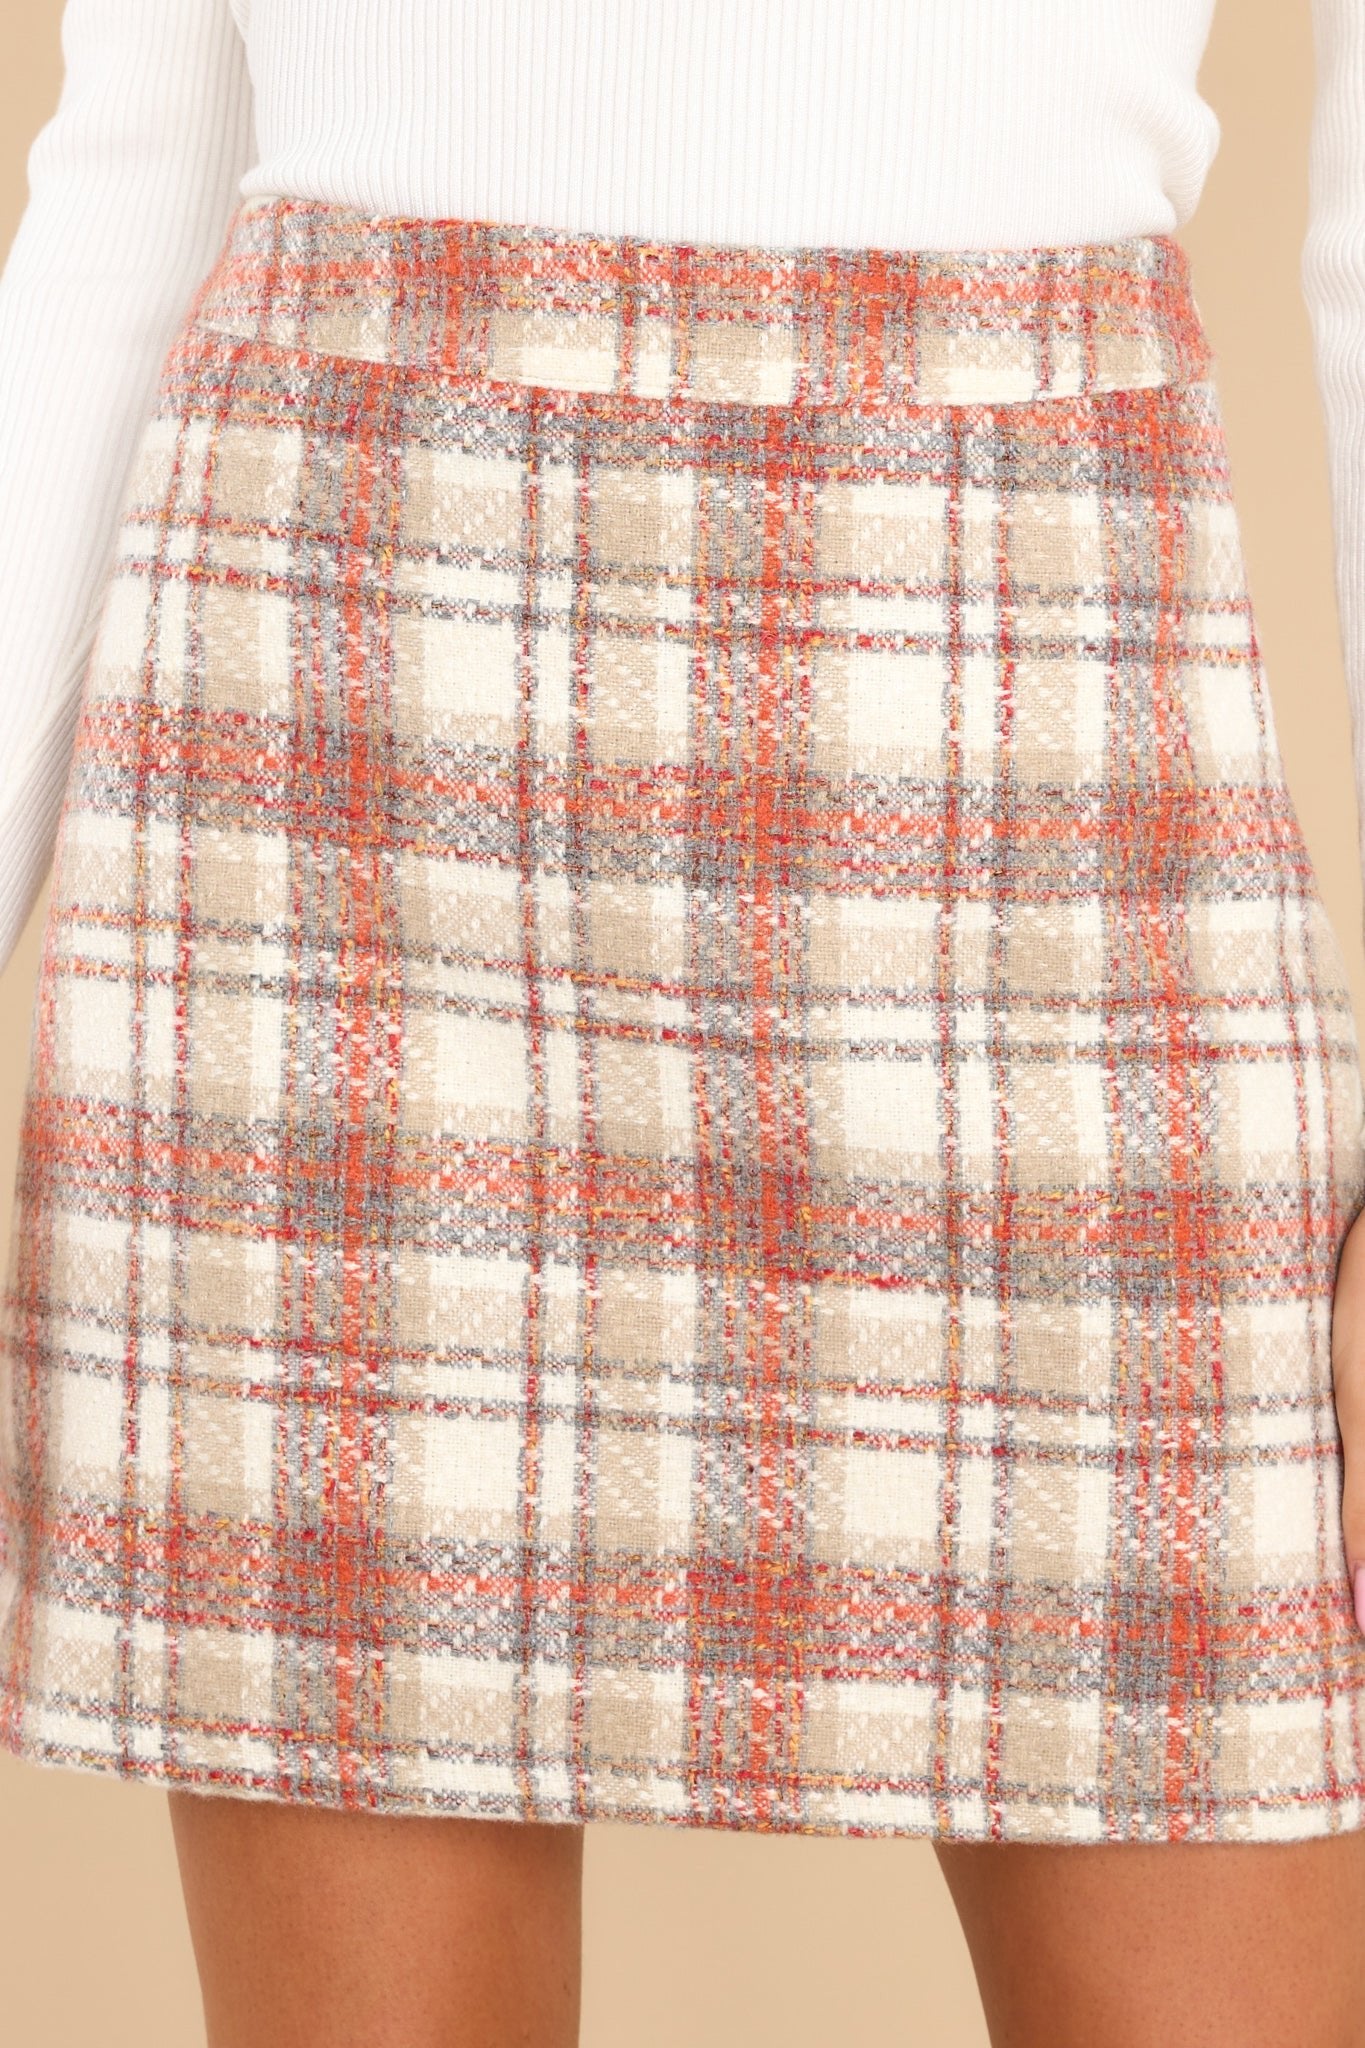 This beige skirt features a high waist, a plaid pattern, and a hidden zipper on the side.